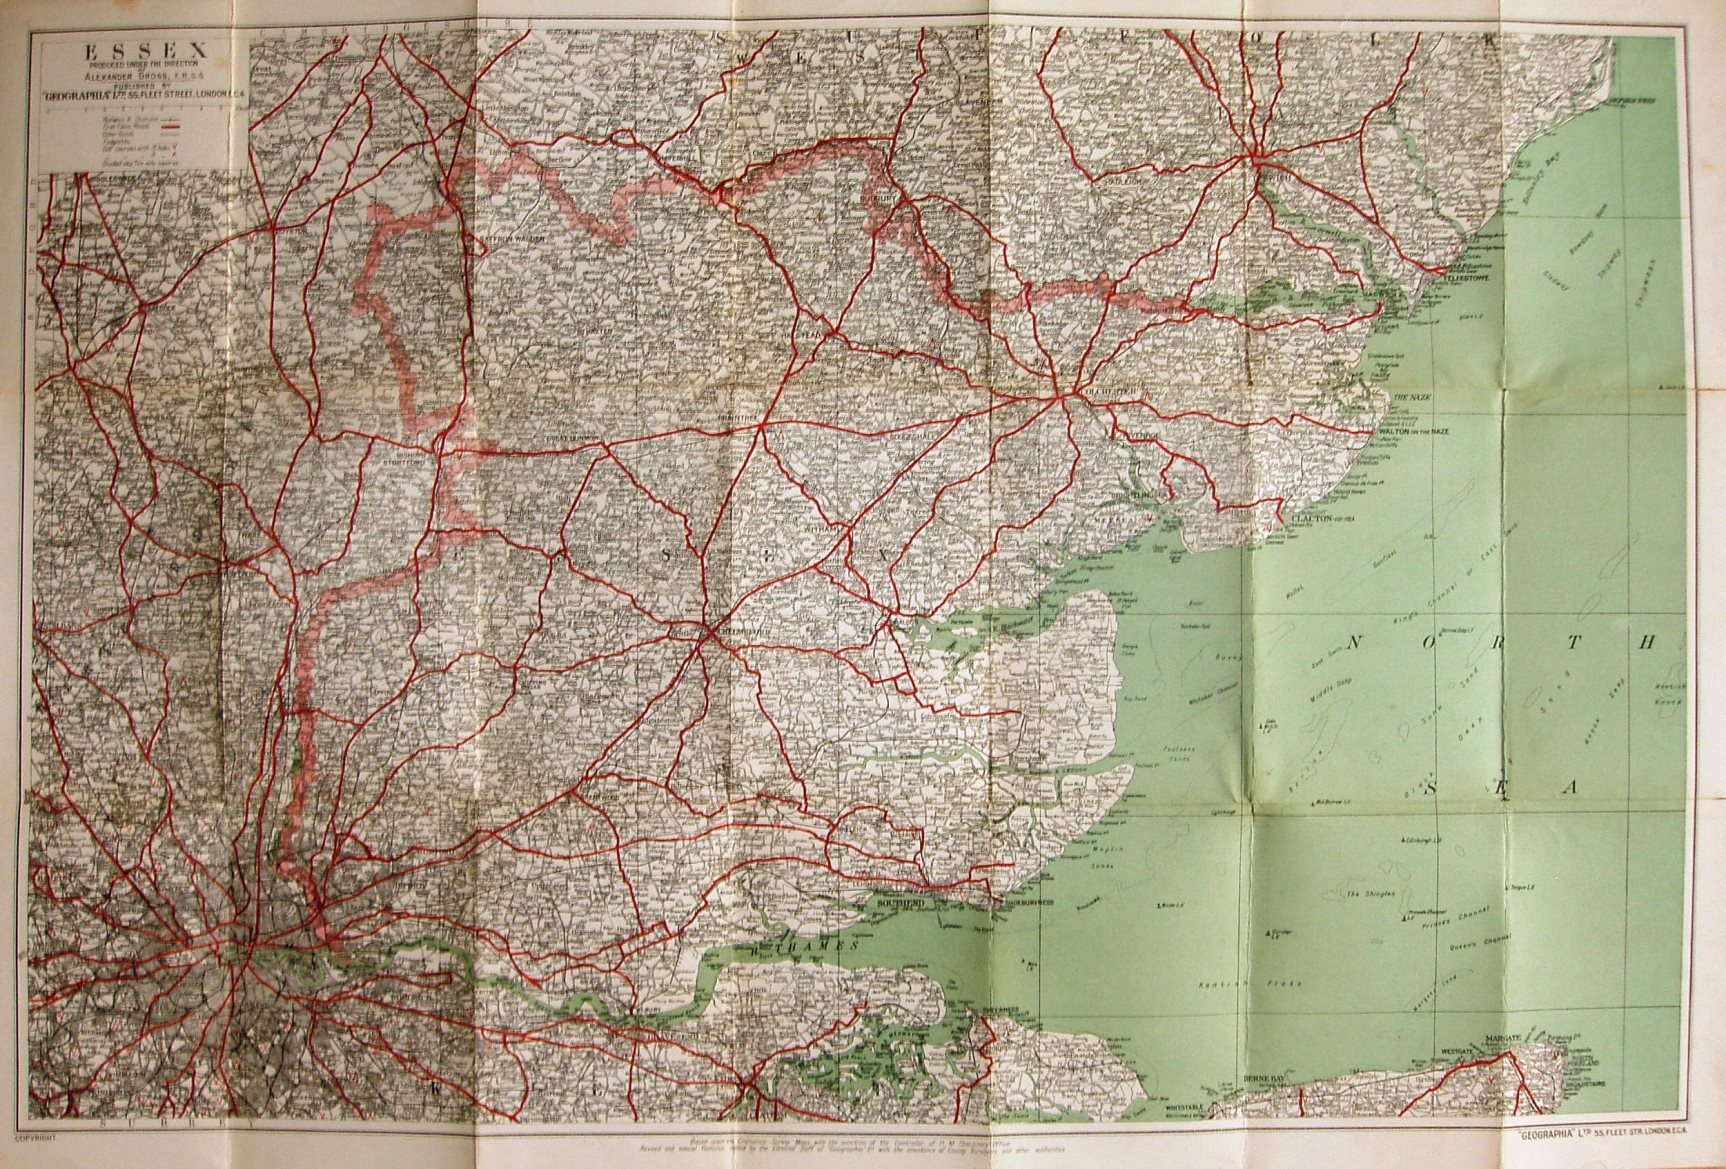 Geographia Road Map of Essex, Sheet 100, 1922